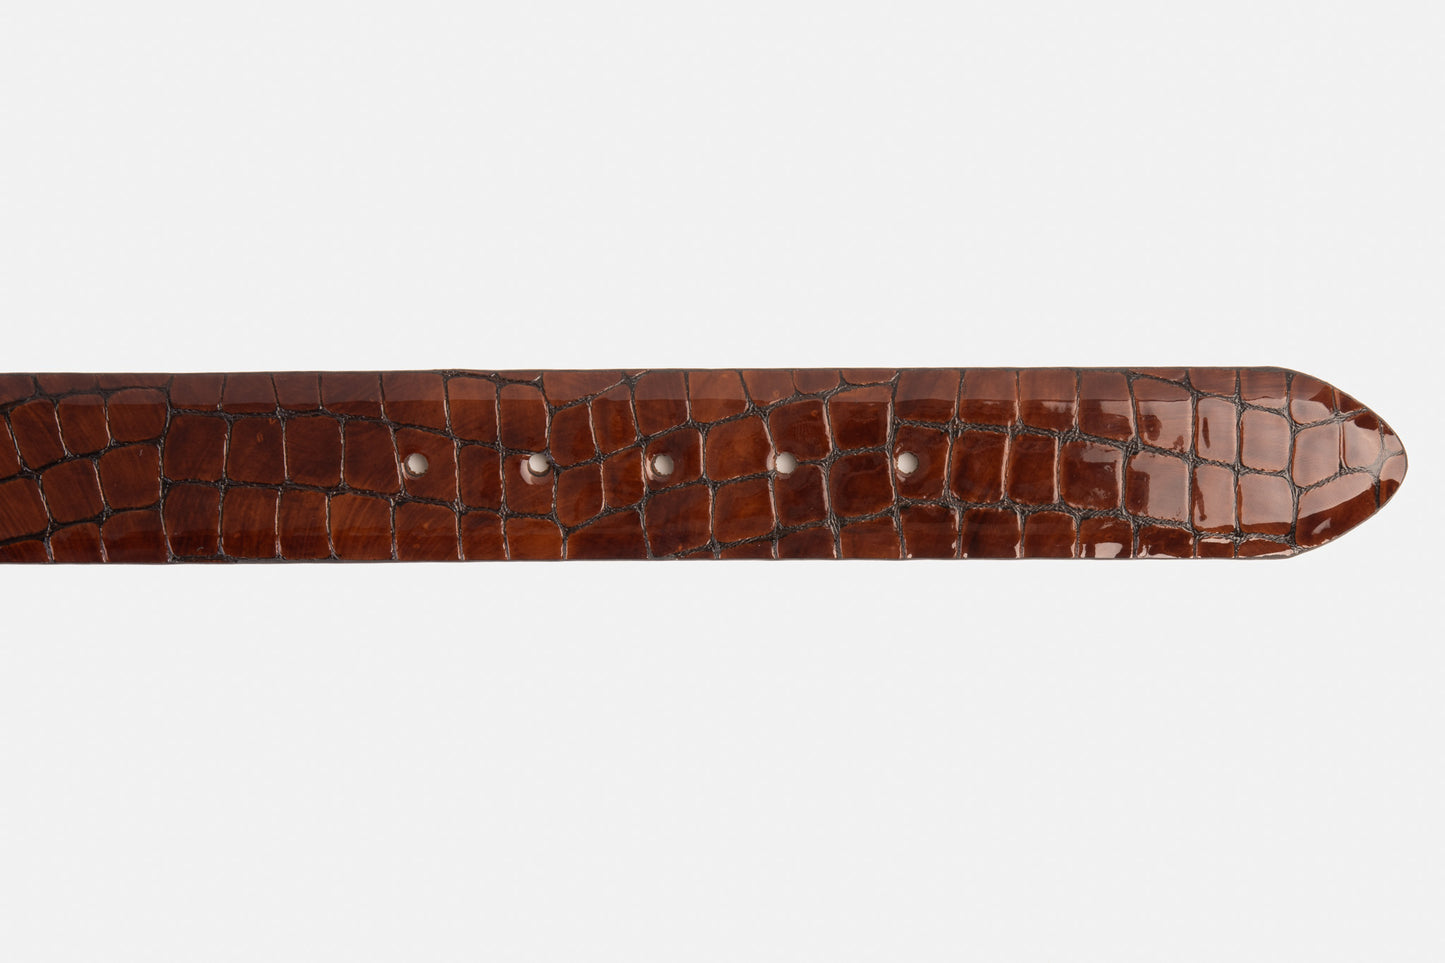 The Cordova Brown Patent Leather Belt